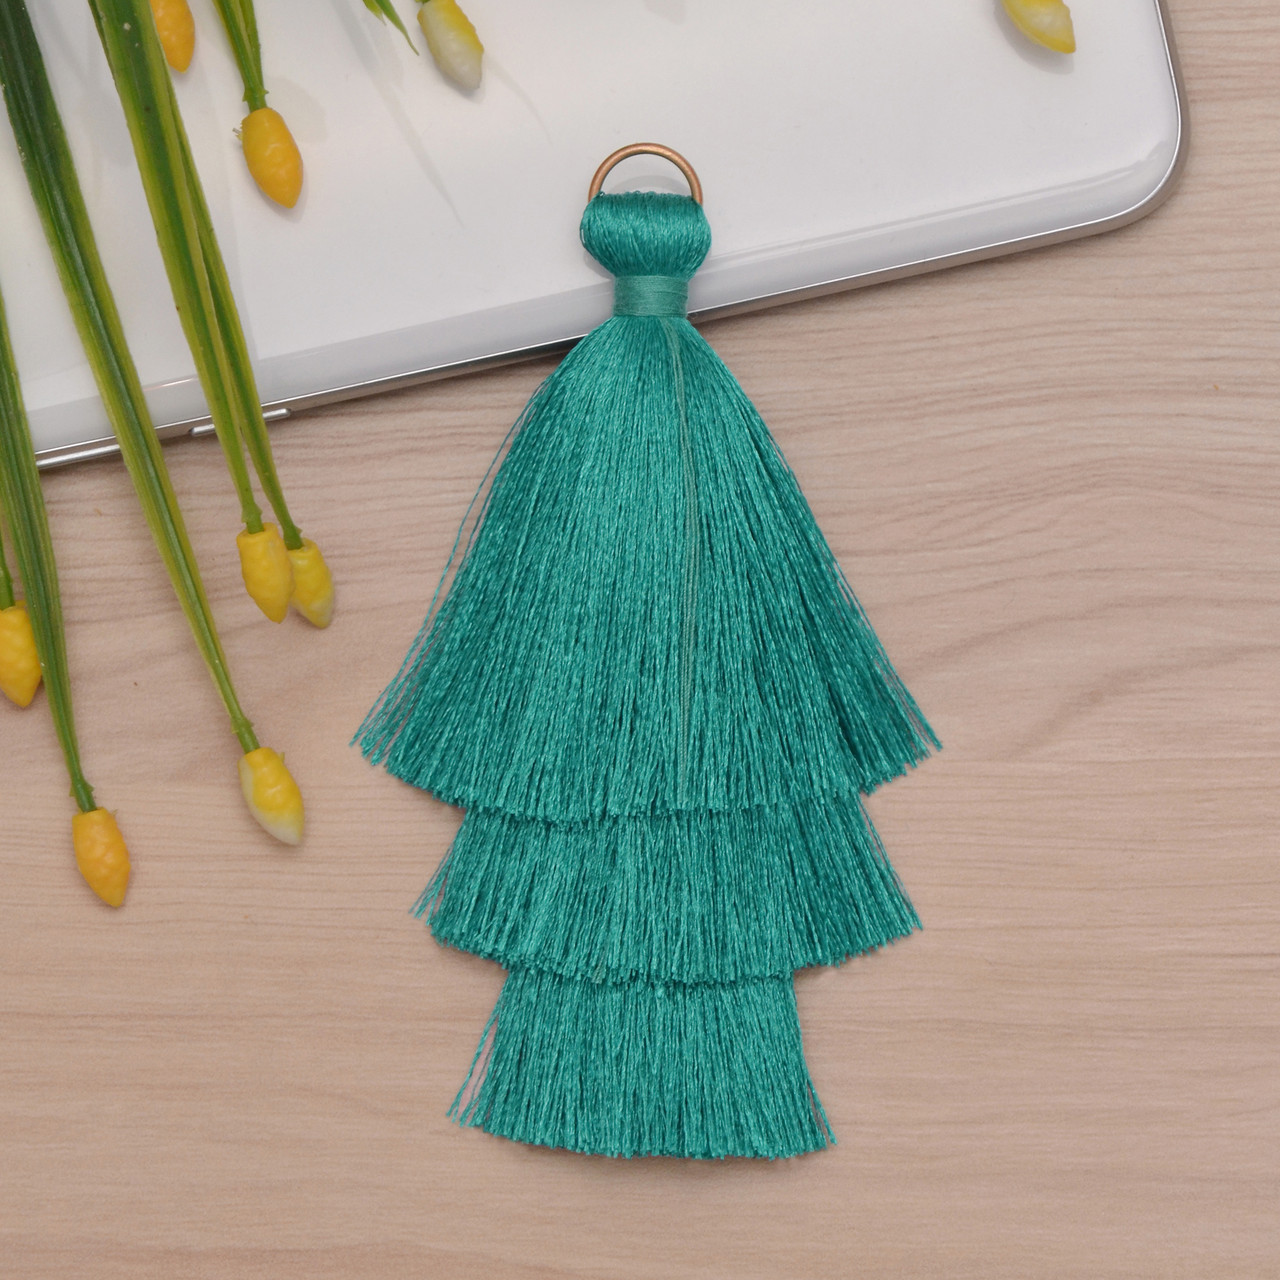 Xsotica Silk Tassel,DIY Craft Supplies Handmade Jewelry Tassels - Turquoise  Tassle / Tassles